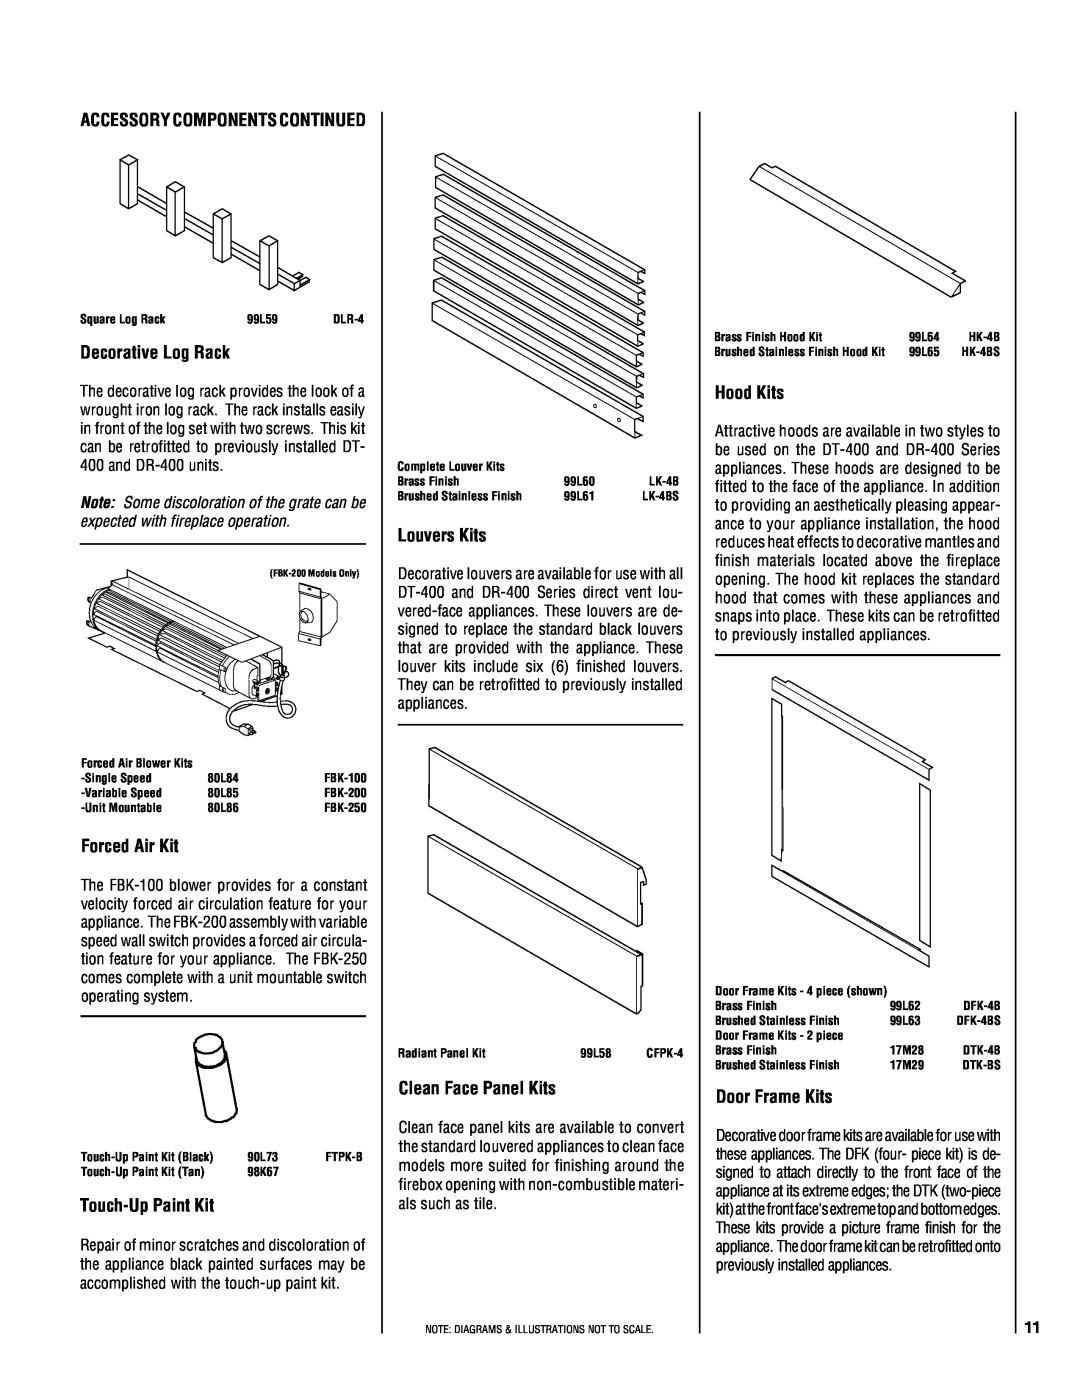 Superior NEC004-TD Decorative Log Rack, Forced Air Kit, Touch-UpPaint Kit, Louvers Kits, Clean Face Panel Kits, Hood Kits 